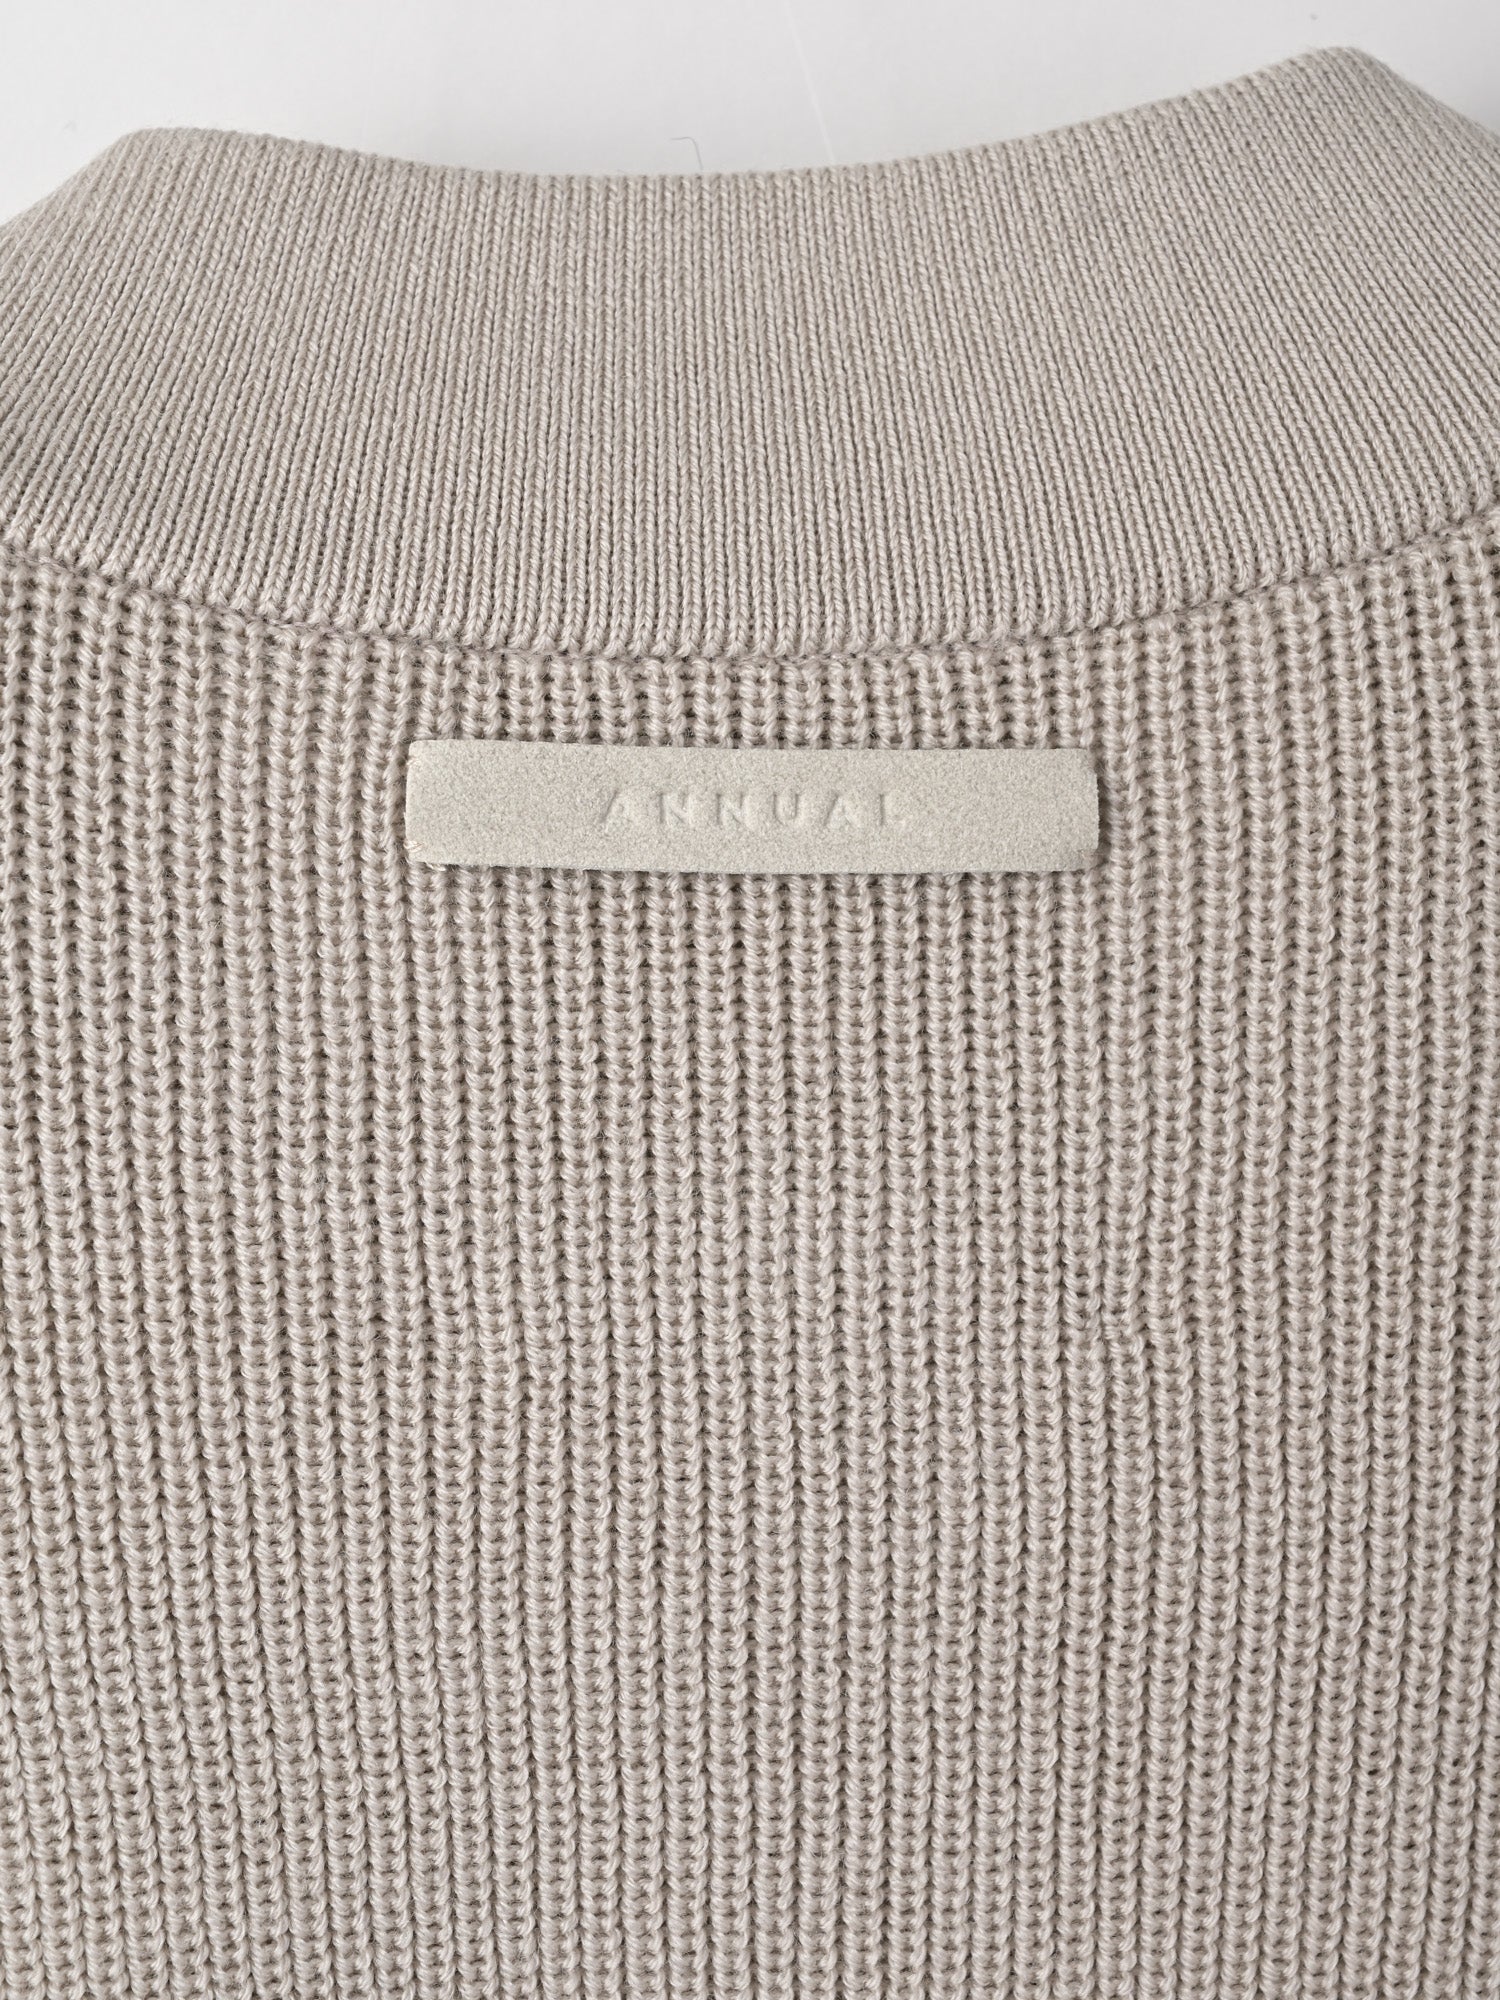 Military sweater<BR>ミリタリーニットを女性らしくアップデート